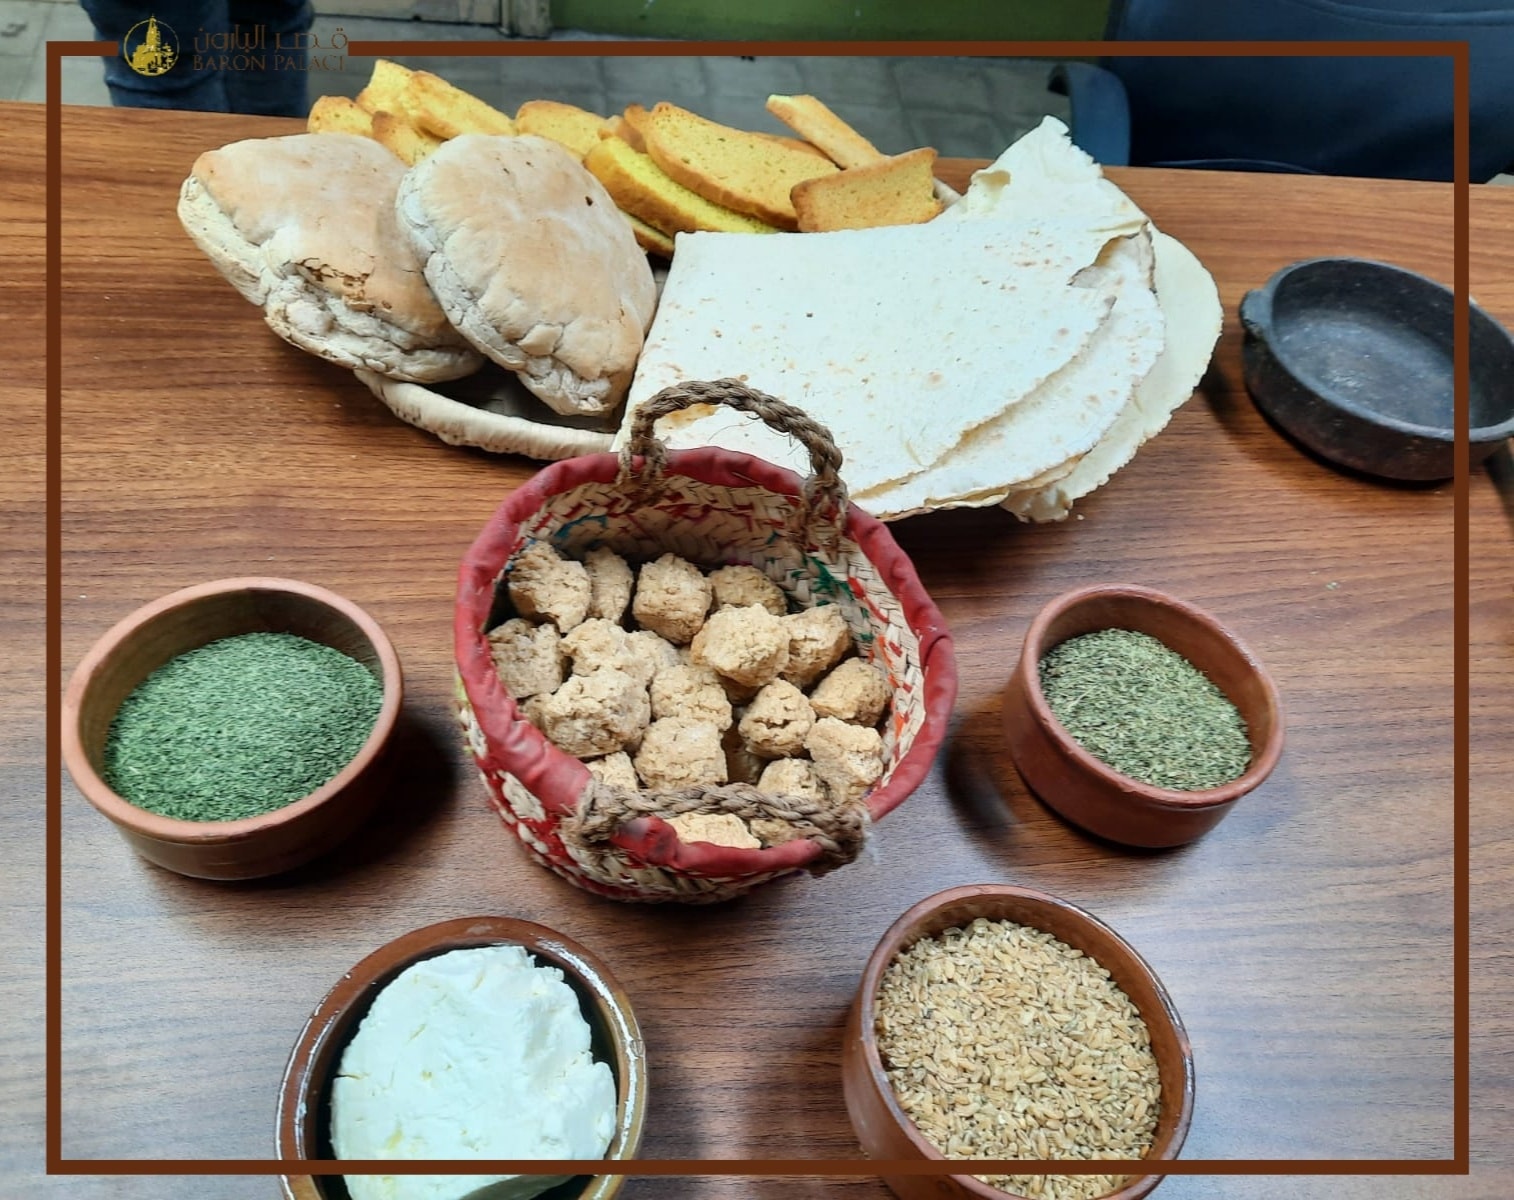 Traditional foods of Upper Egypt made during heritage workshop